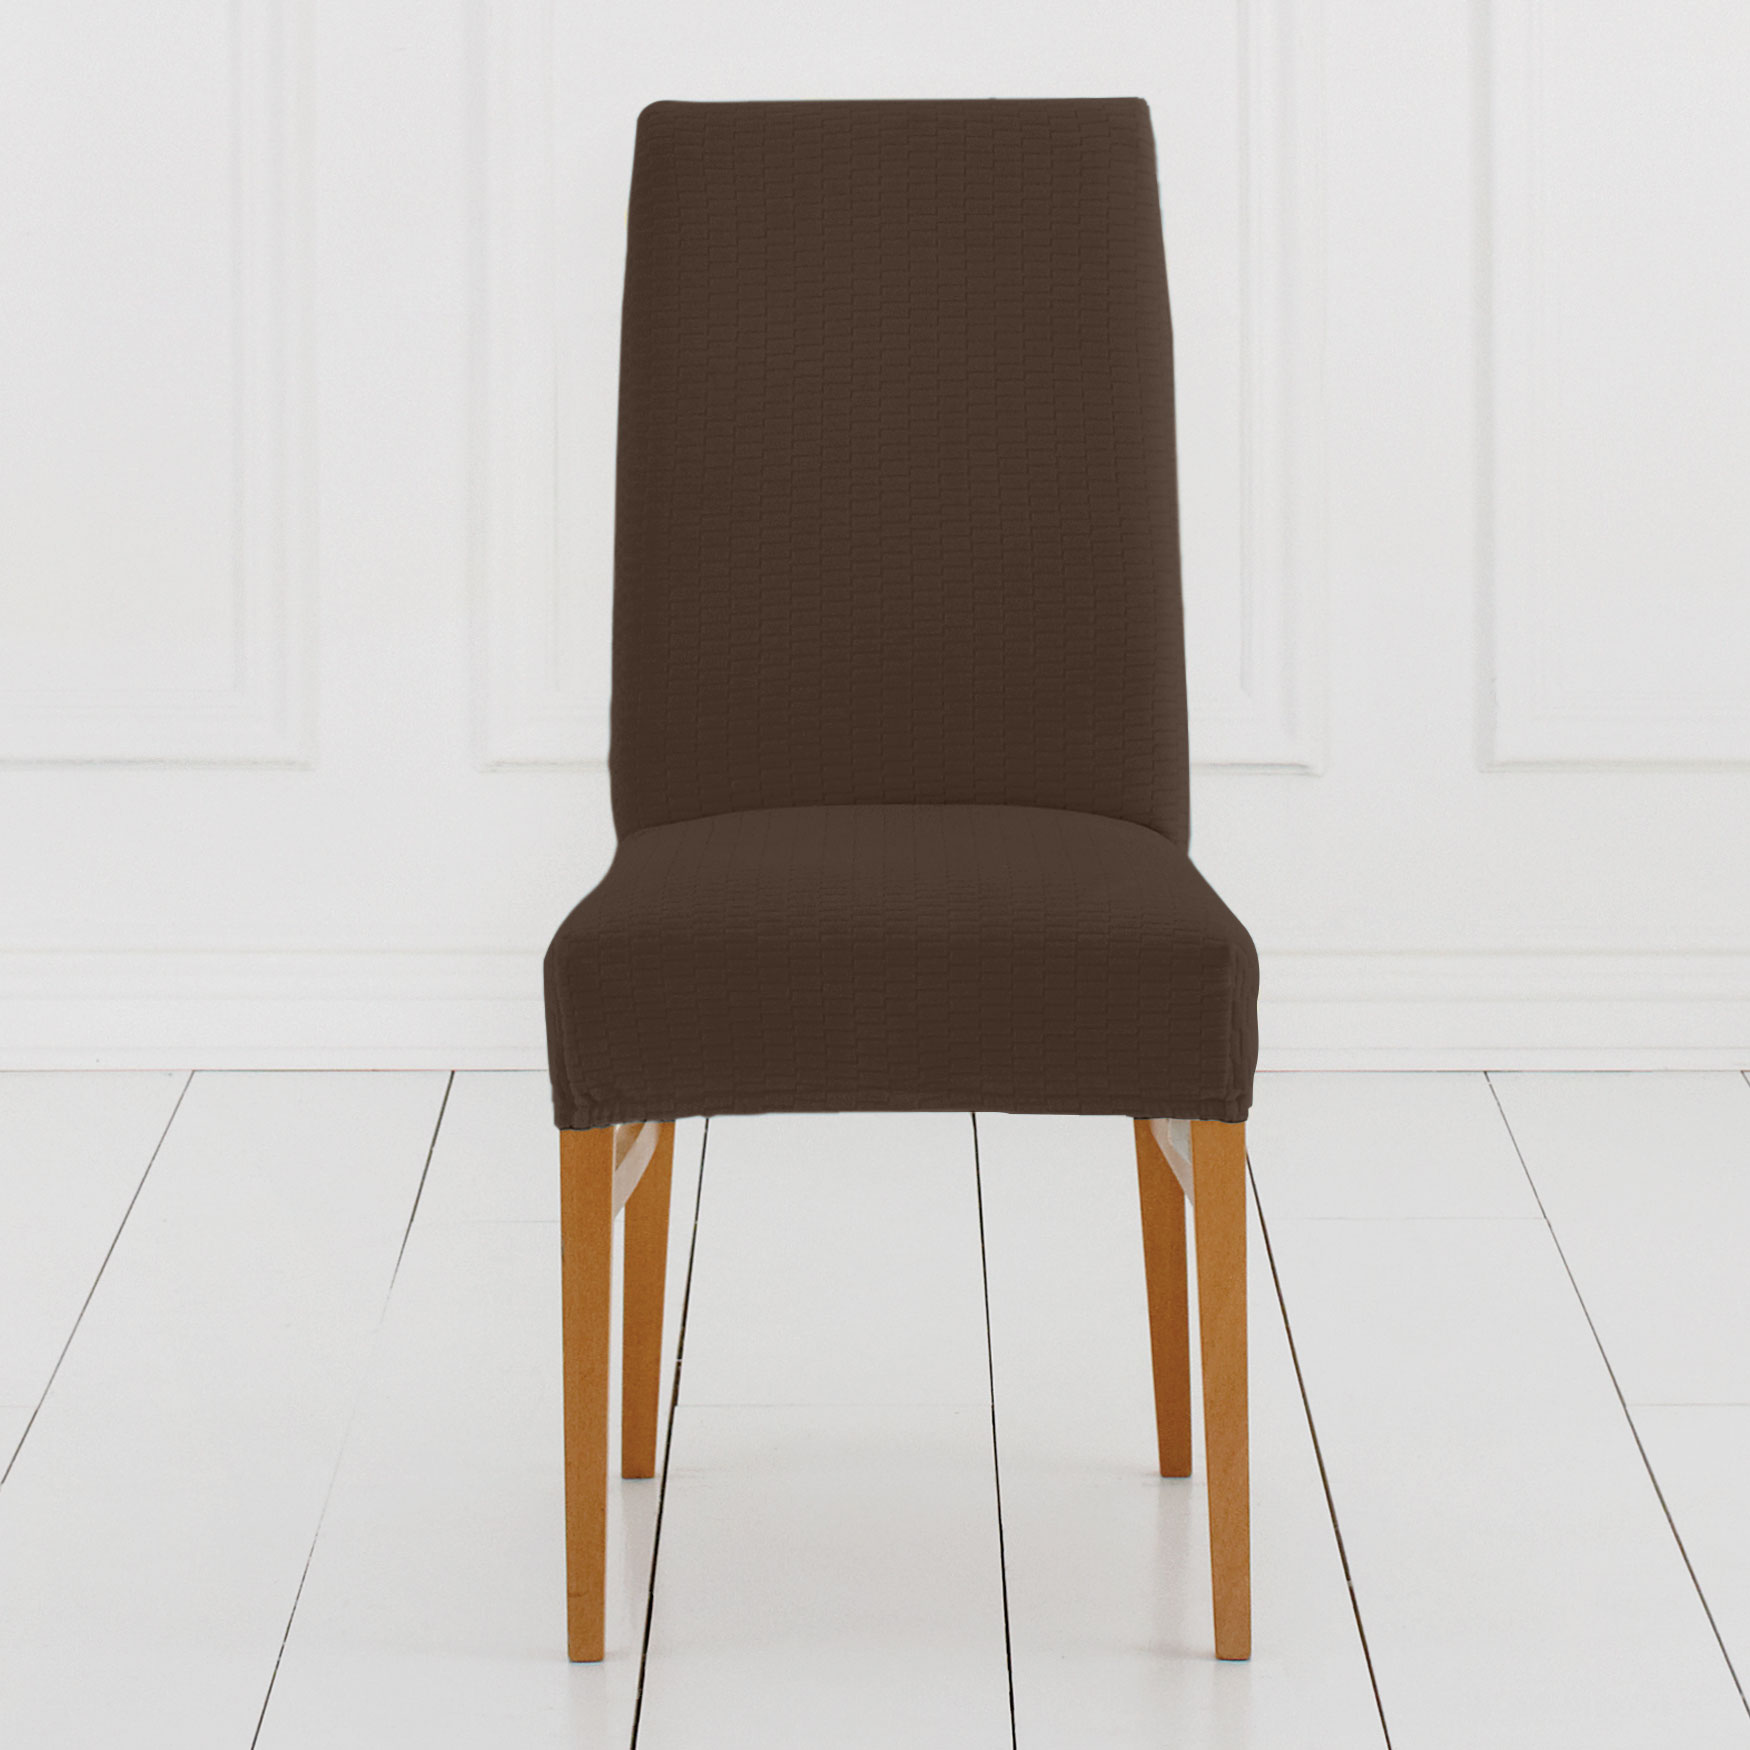 BH Studio Brighton Stretch Dining Room Chair Slipcover, 